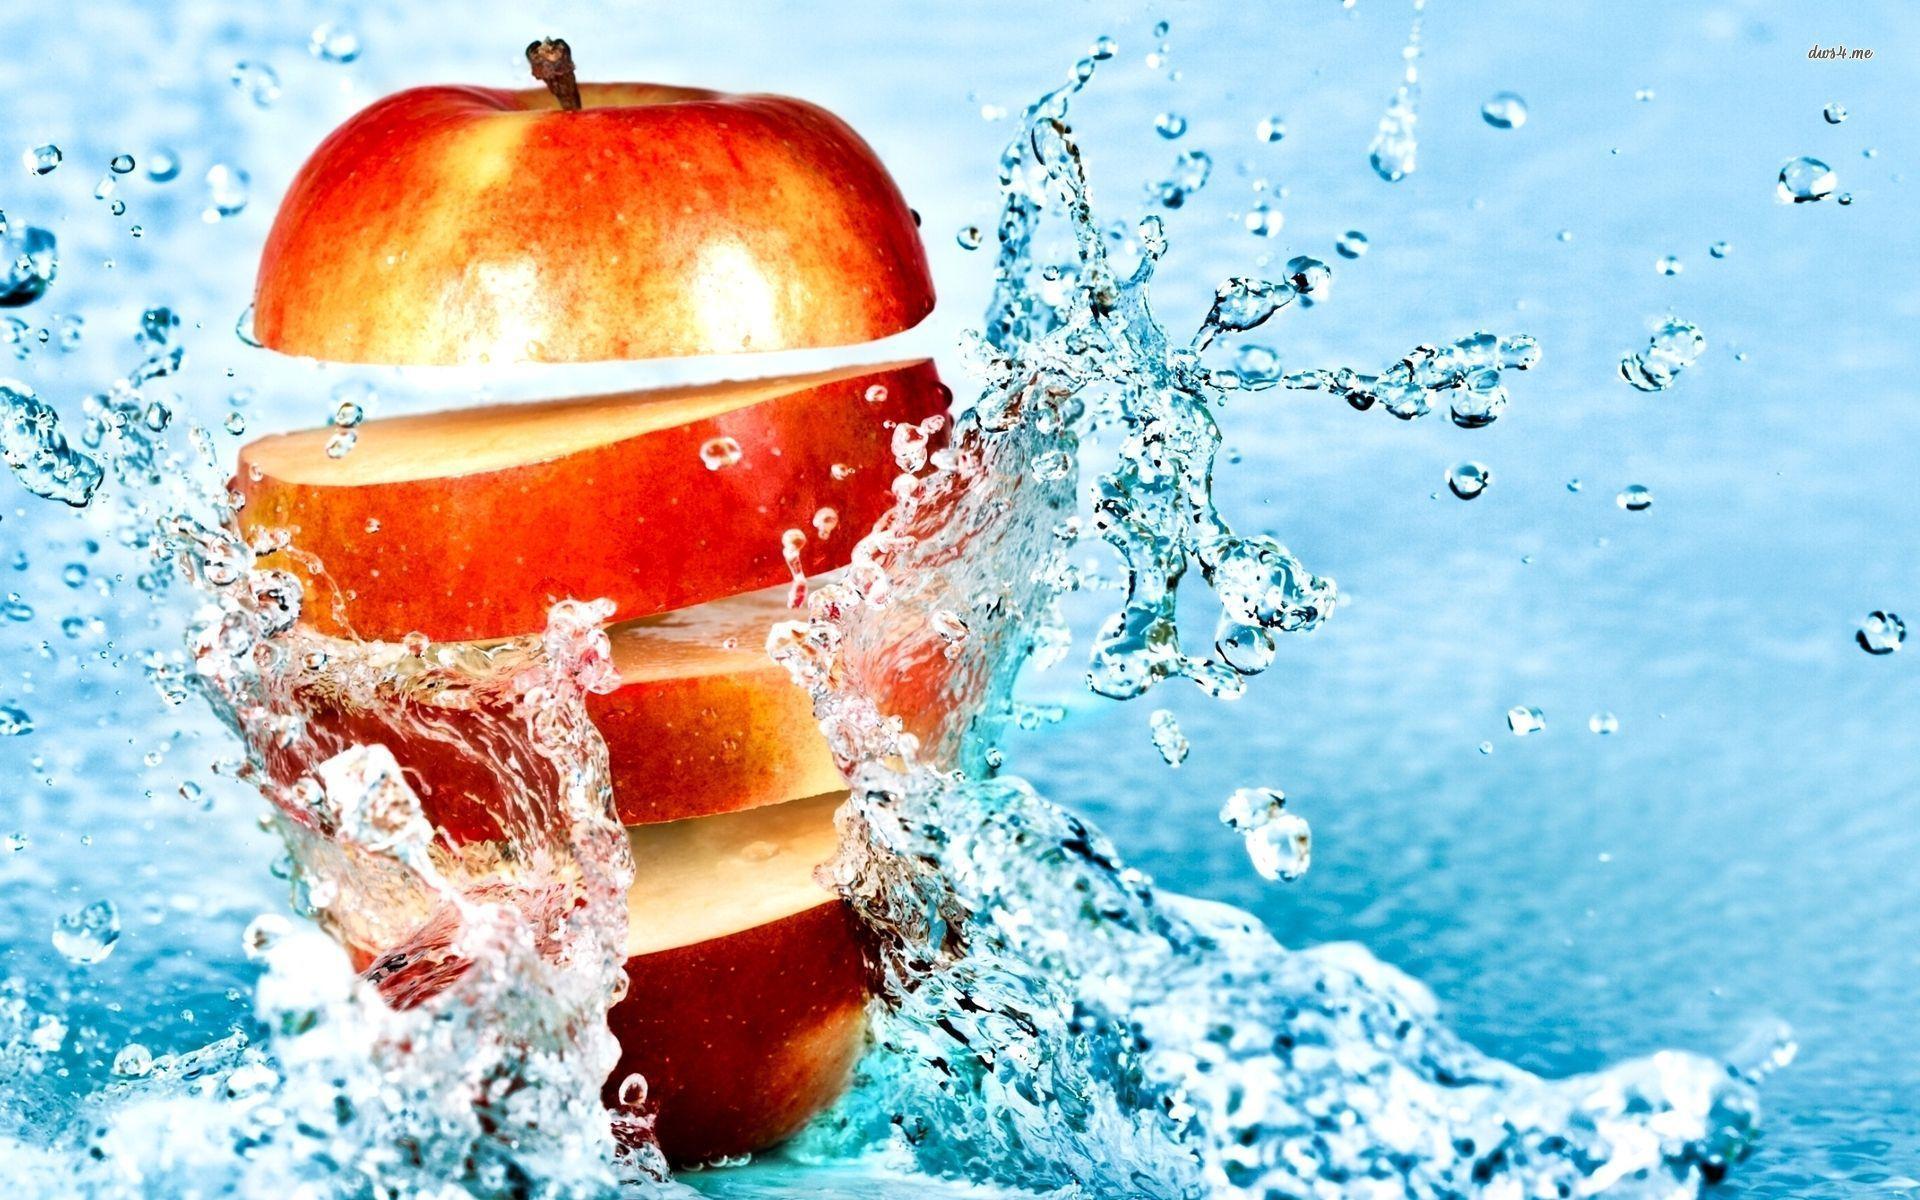 Sliced apple in the water wallpaper wallpaper - #